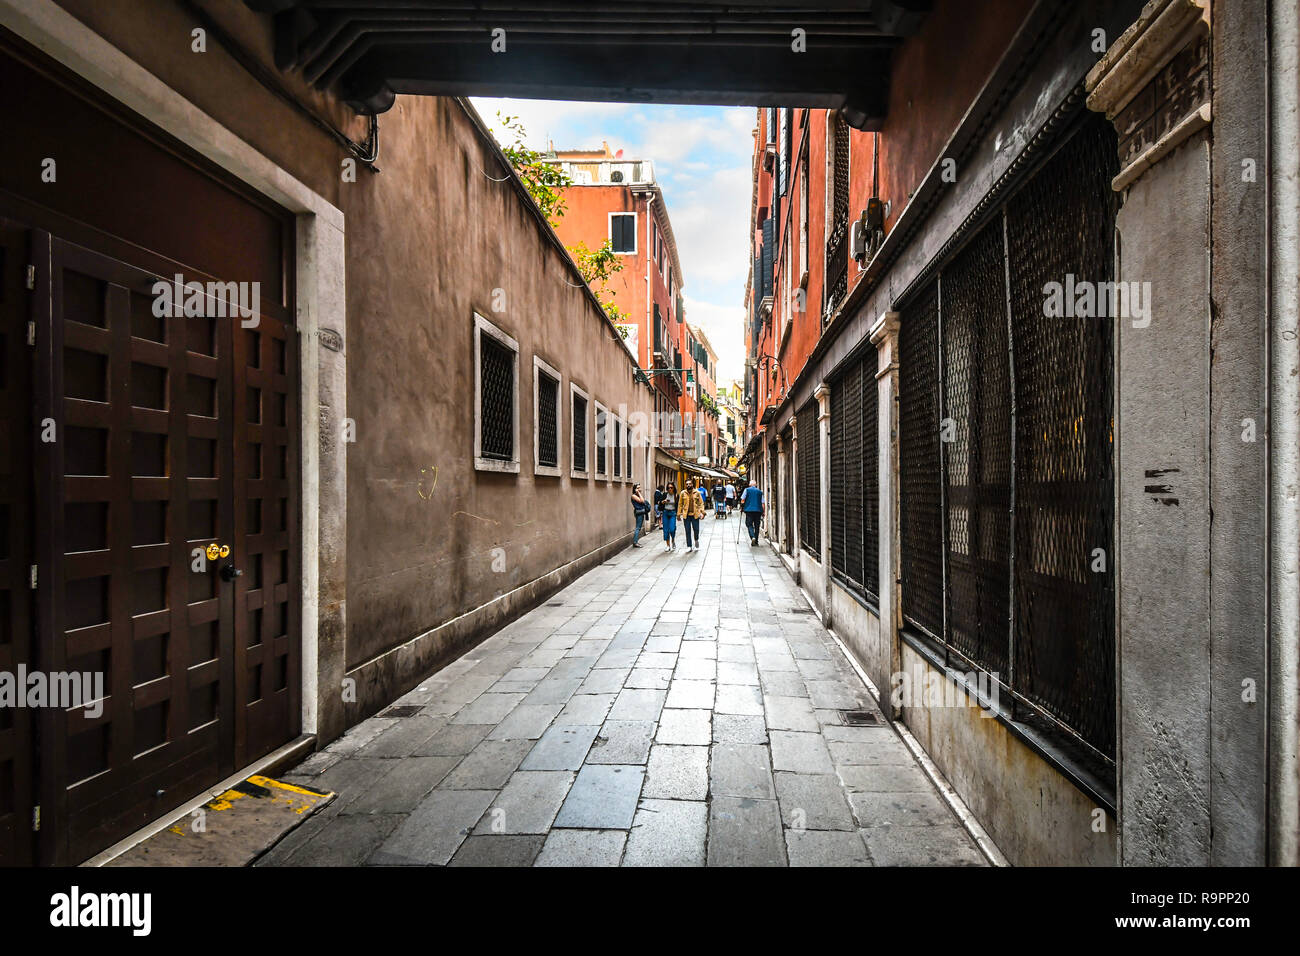 Venice, Italy - September 18 2018: Tourists walk past cafes and shops along the narrow streets of Venice, Italy Stock Photo